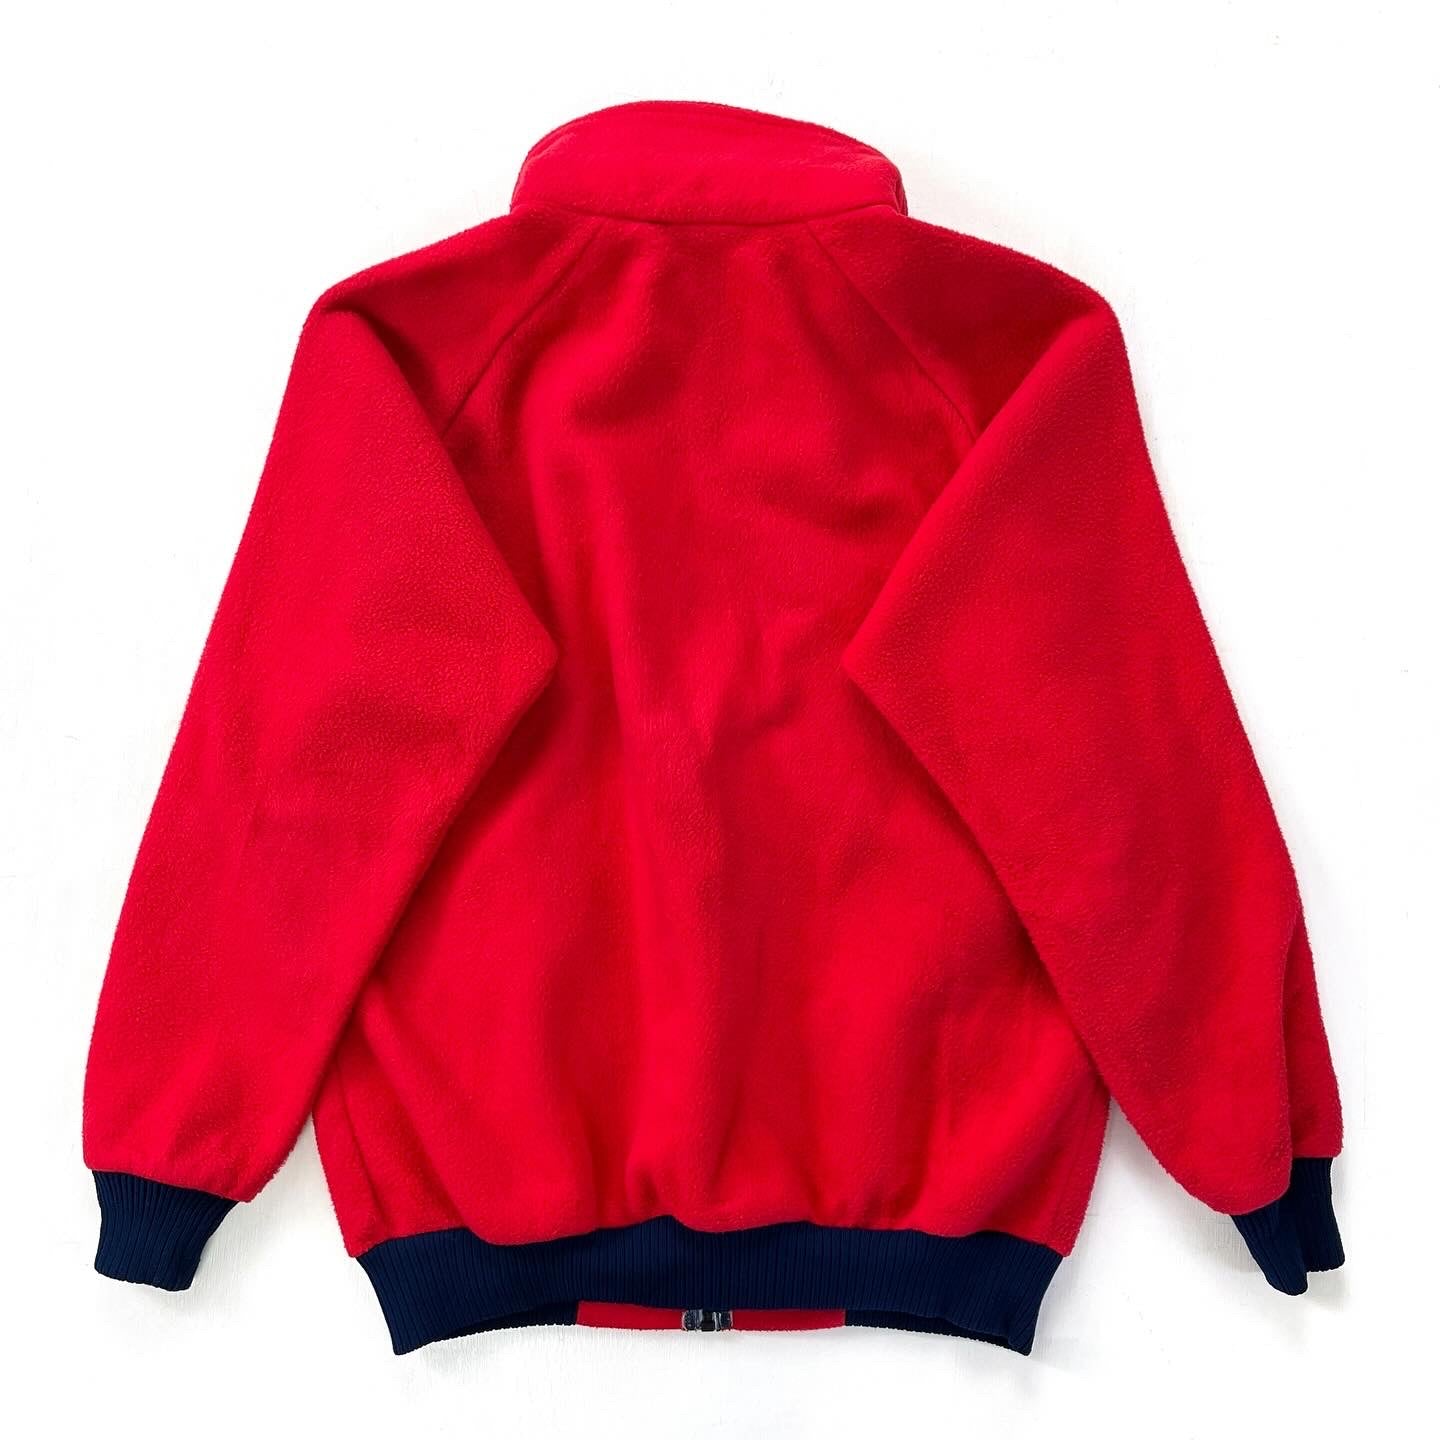 1983 Patagonia Bunting Full-Zip Fleece Jacket, Red & Navy (L)